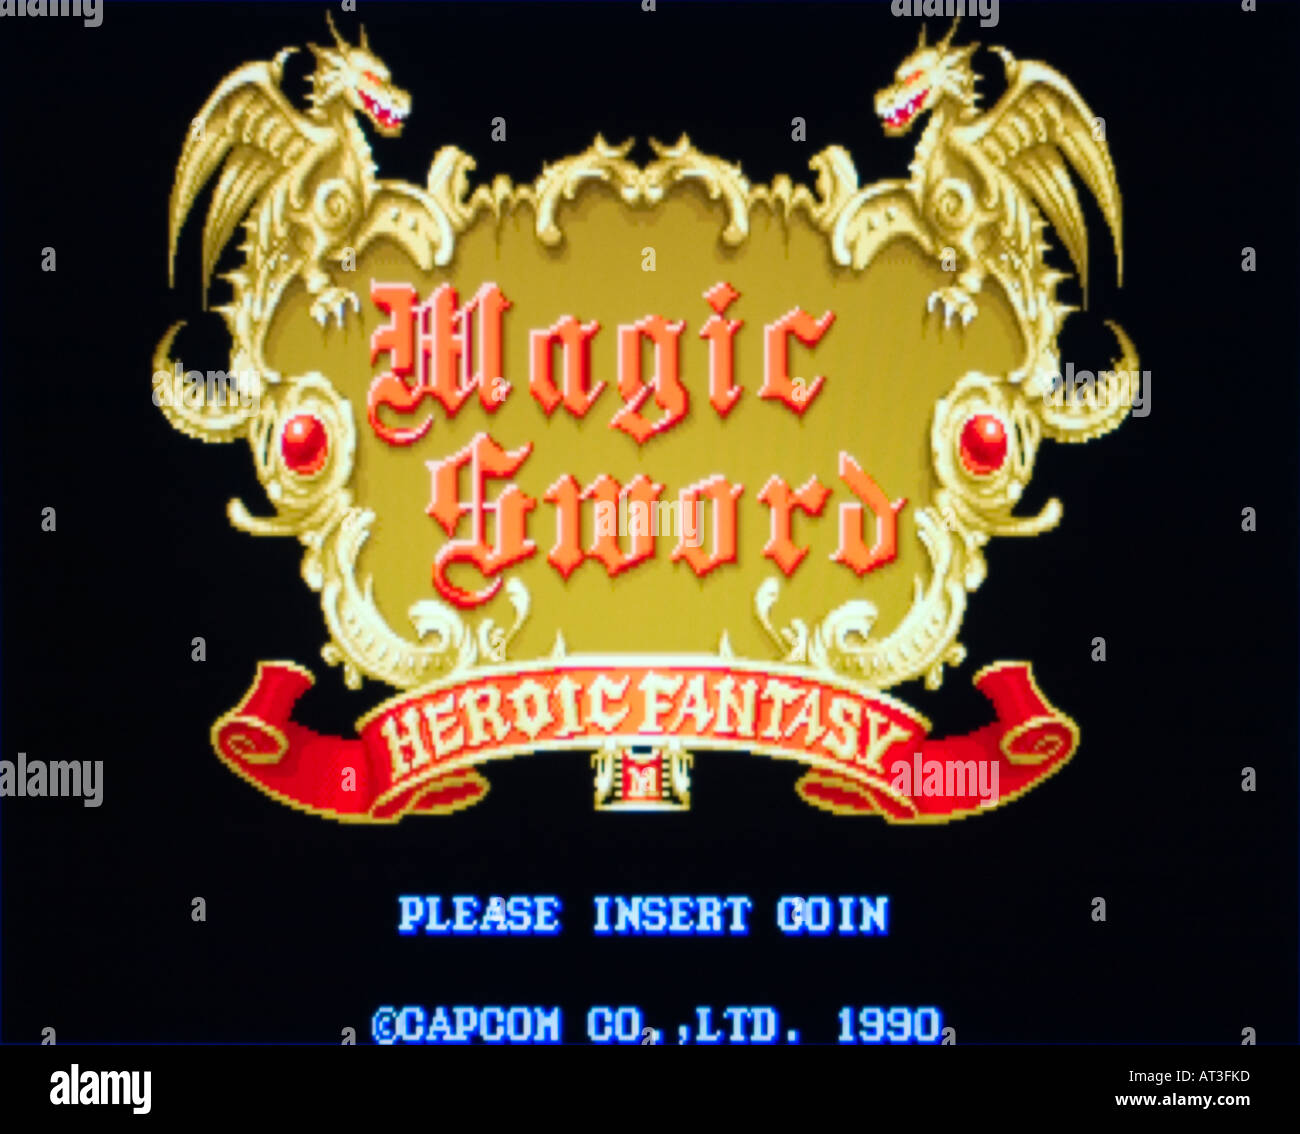 Magic Sword Heroic Fantasy Capcom 1990 vintage arcade videogame screenshot - Editorial Use Only Stock Photo